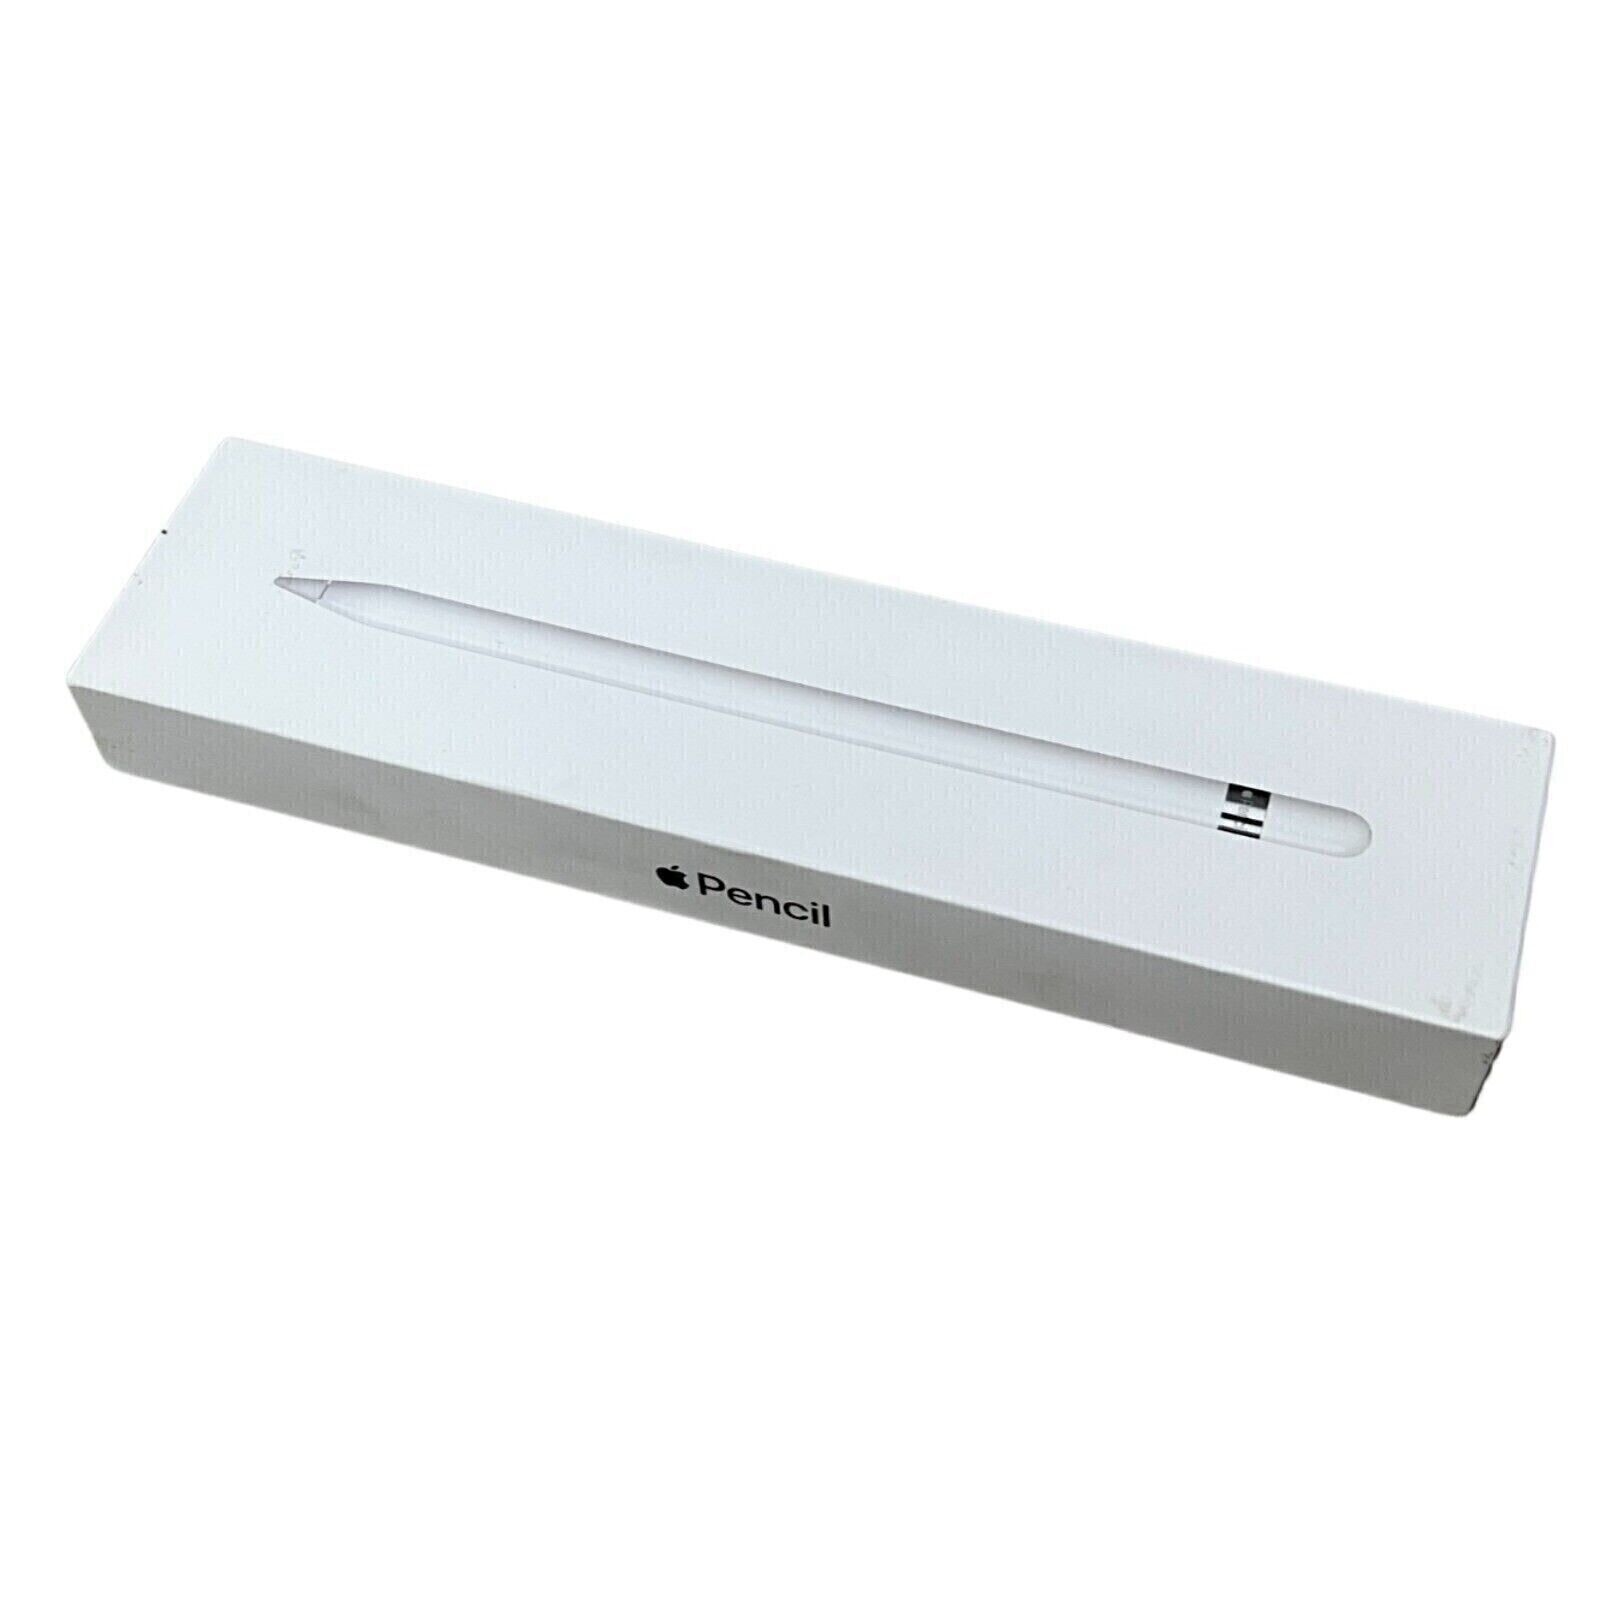 New Apple Pencil 1st Generation White for Apple iPad Pro & iPad 6th MK0C2AM/A